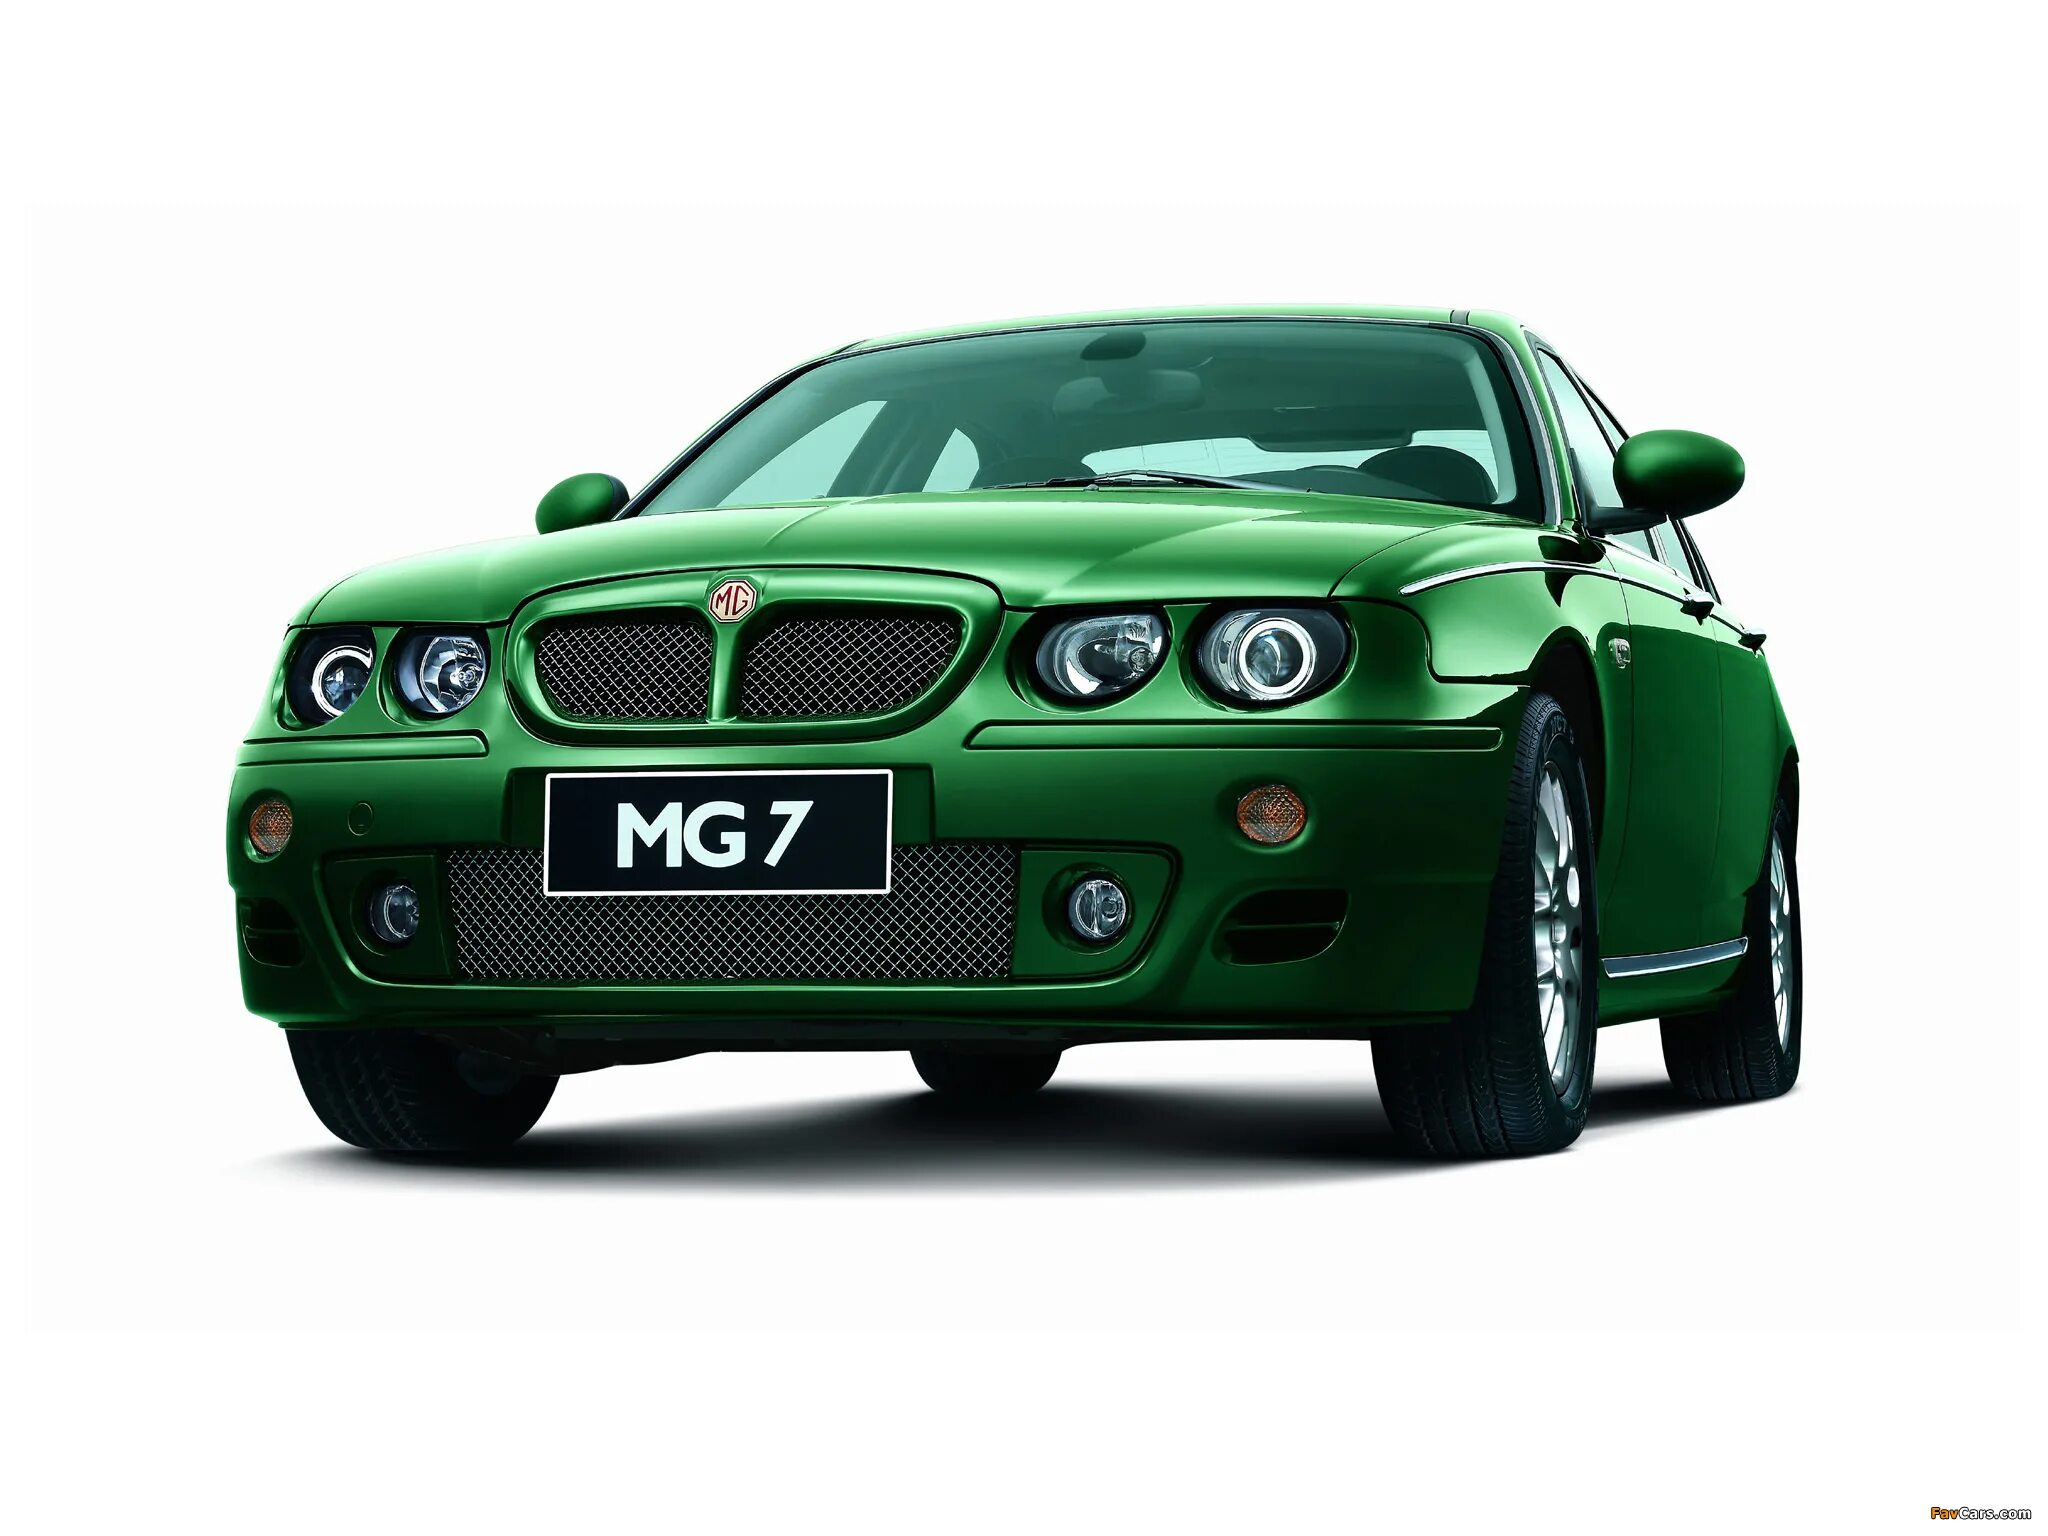 Mg 750. Rover MG 7. Mg7 автомобиль 2023. Mg7 китайский автомобиль. Roewe mg7.